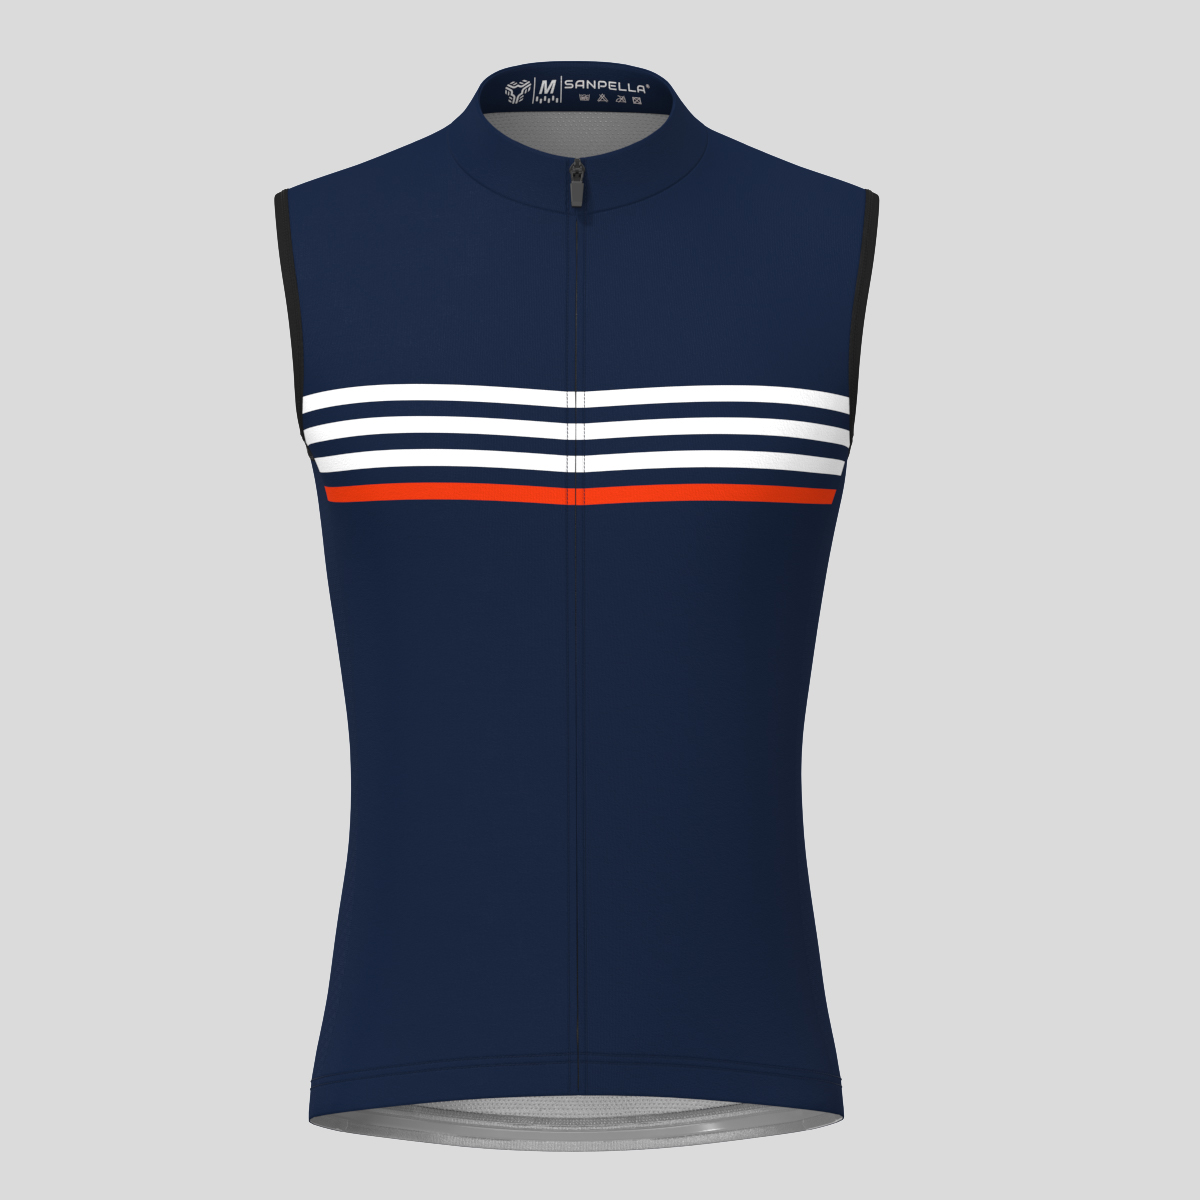 Minimal Stripes Men's Sleeveless Cycling Jersey - Navy/White/Red